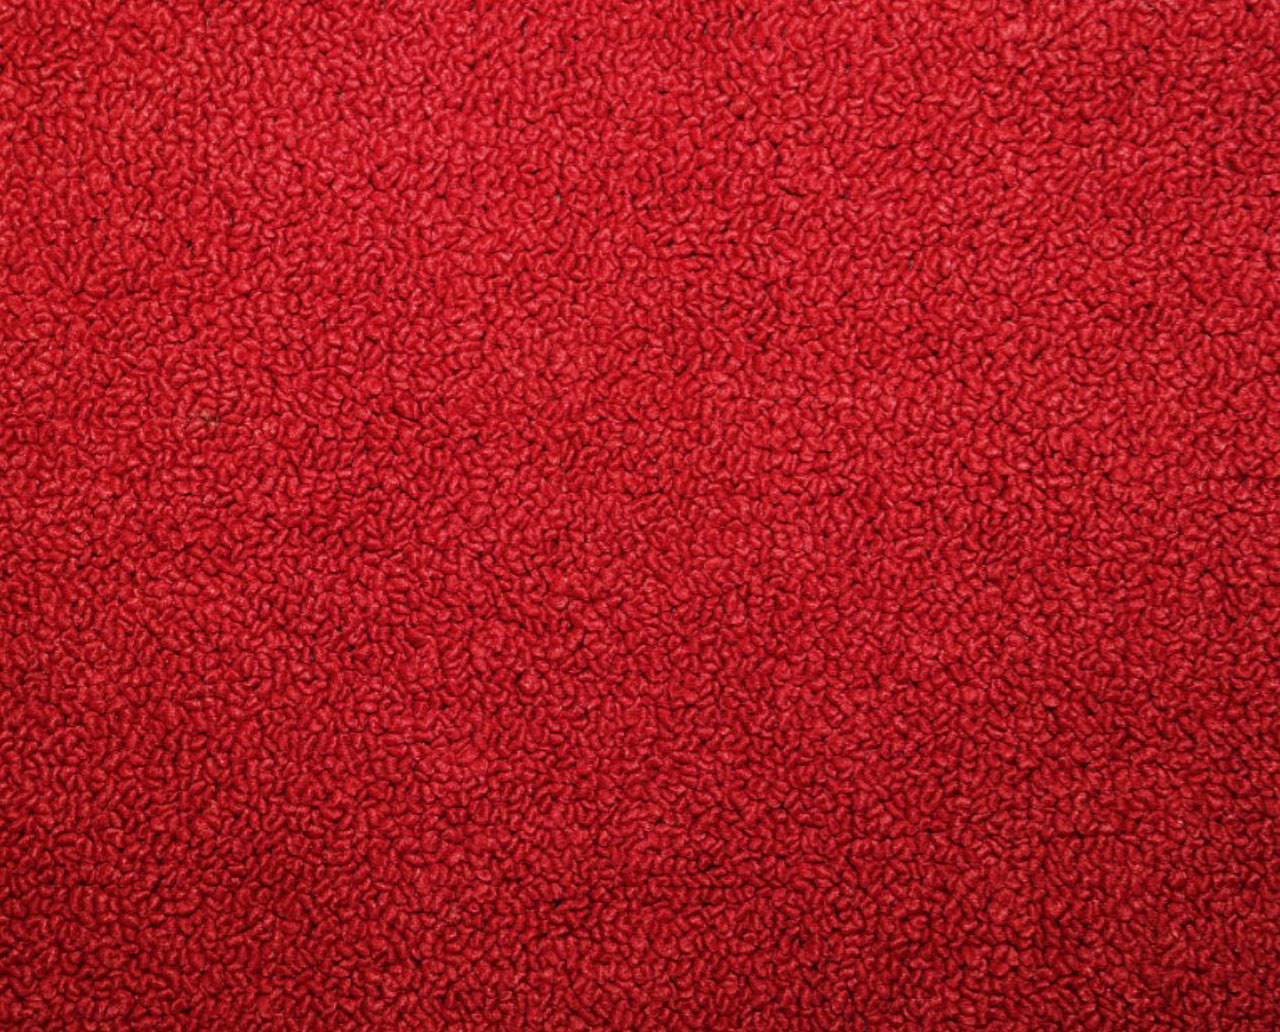 Holden Kingswood HQ Kingswood Wagon Sep72-Mar73 12E Calypso Red Carpet (Image 1 of 1)